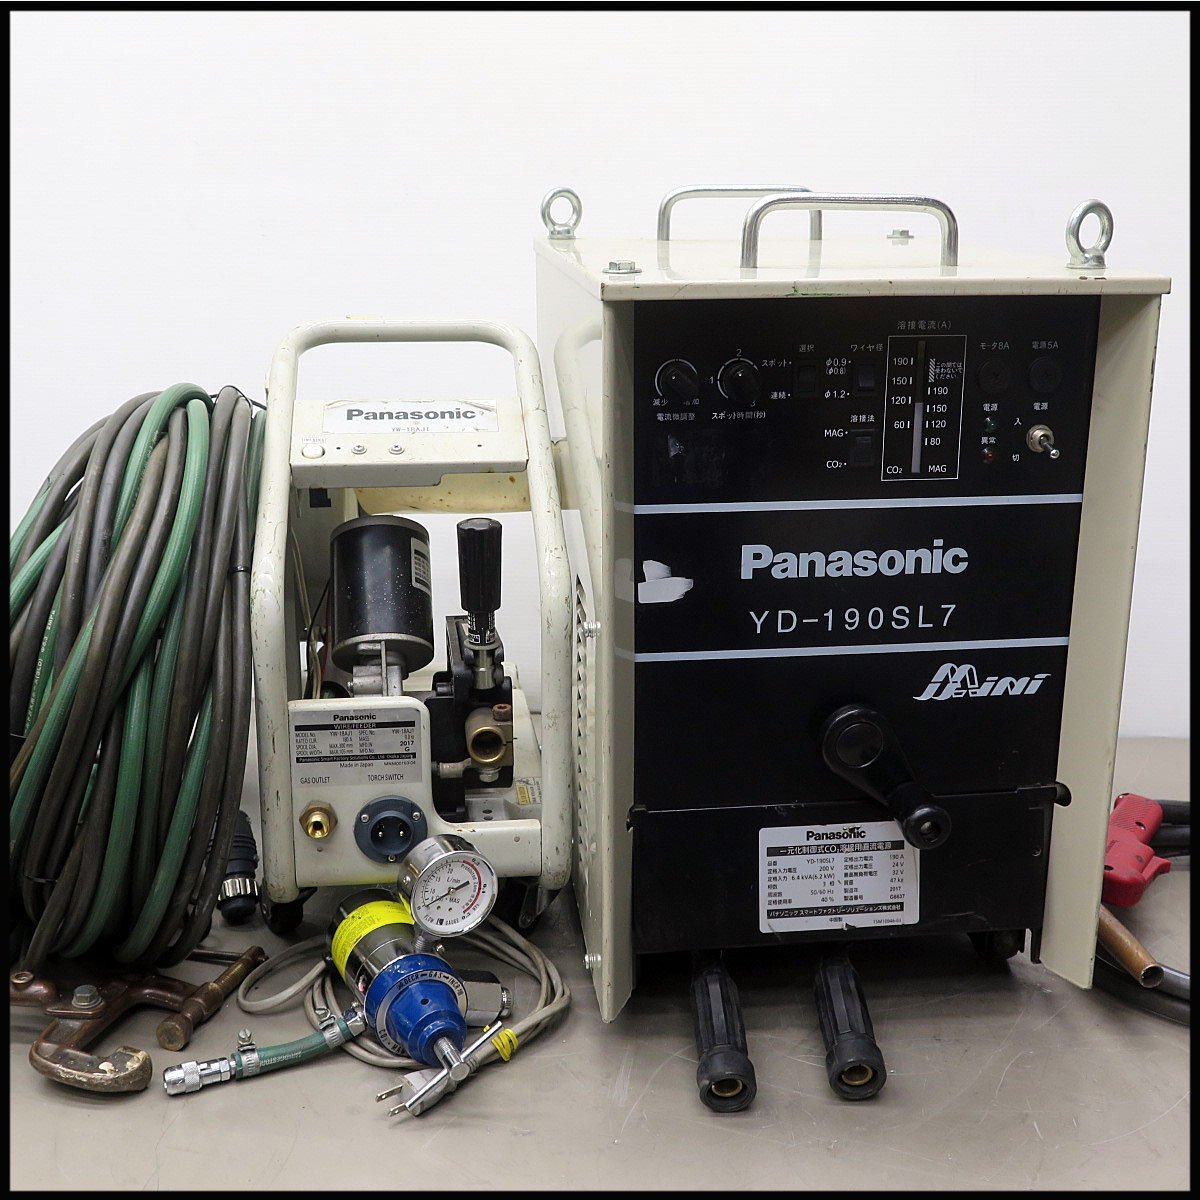 # Panasonic semi-automatic welding machine YD-190SL7/Panasonic one origin . control type CO2 welding for direct current power supply / welding 